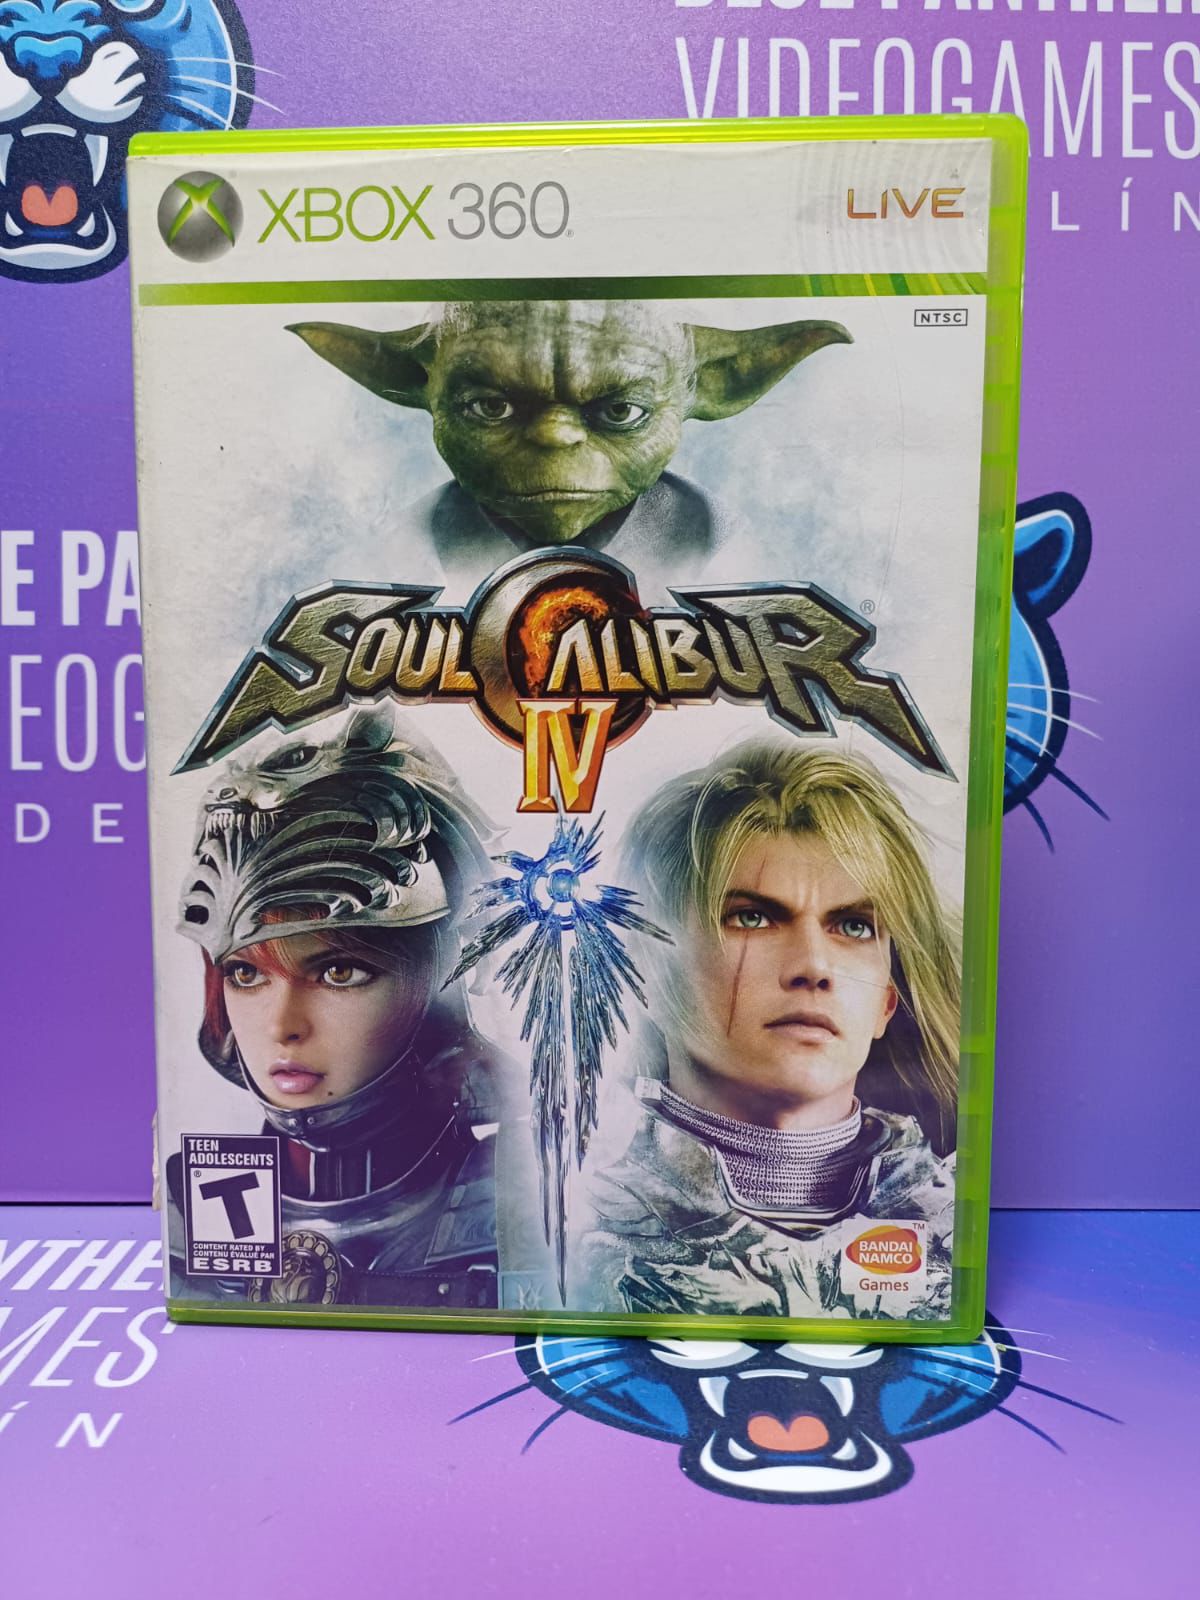 Soulcalibur IV - Xbox 360